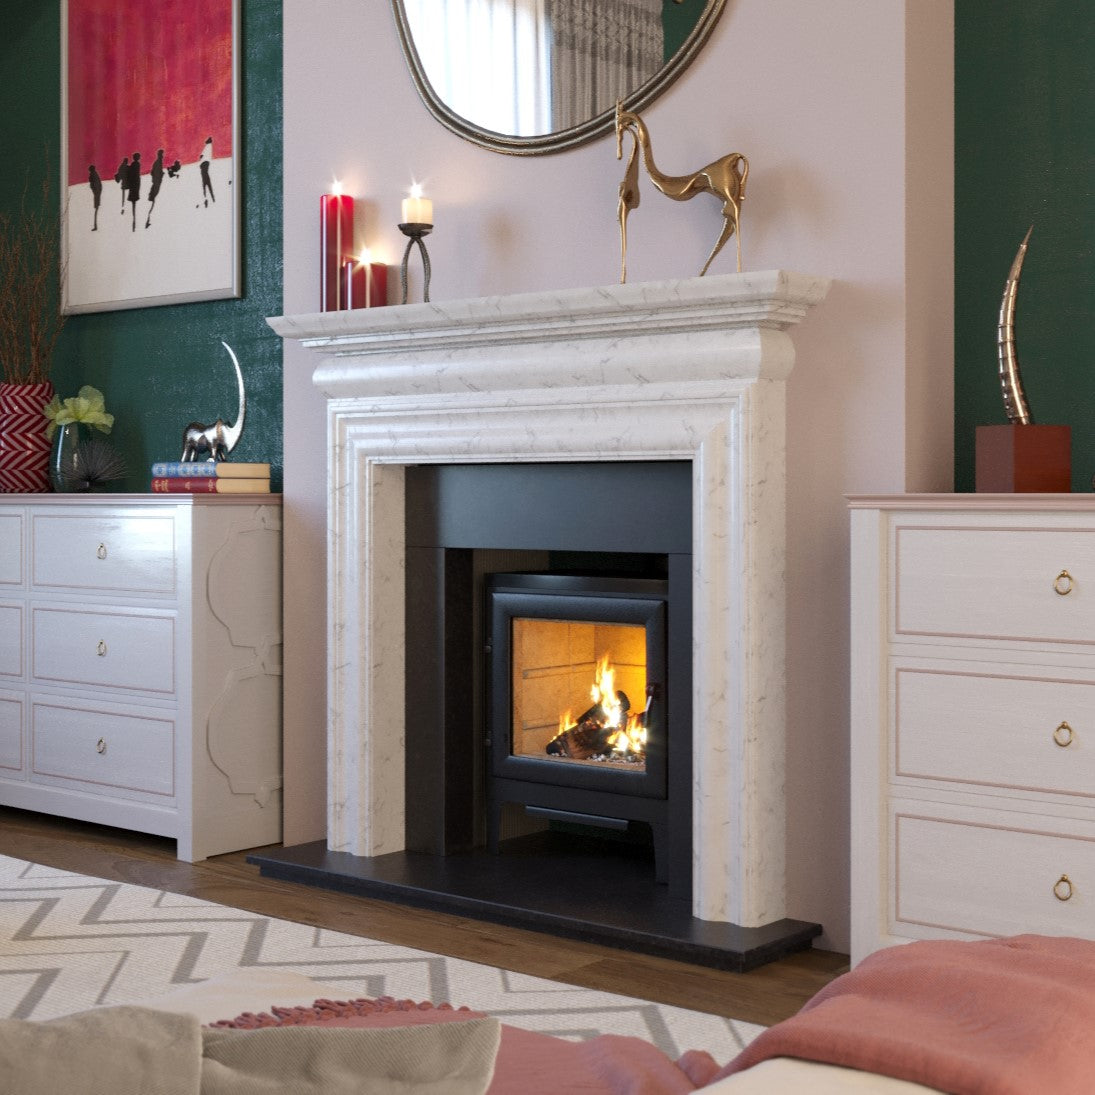 Marble mantelpiece fireplace surround